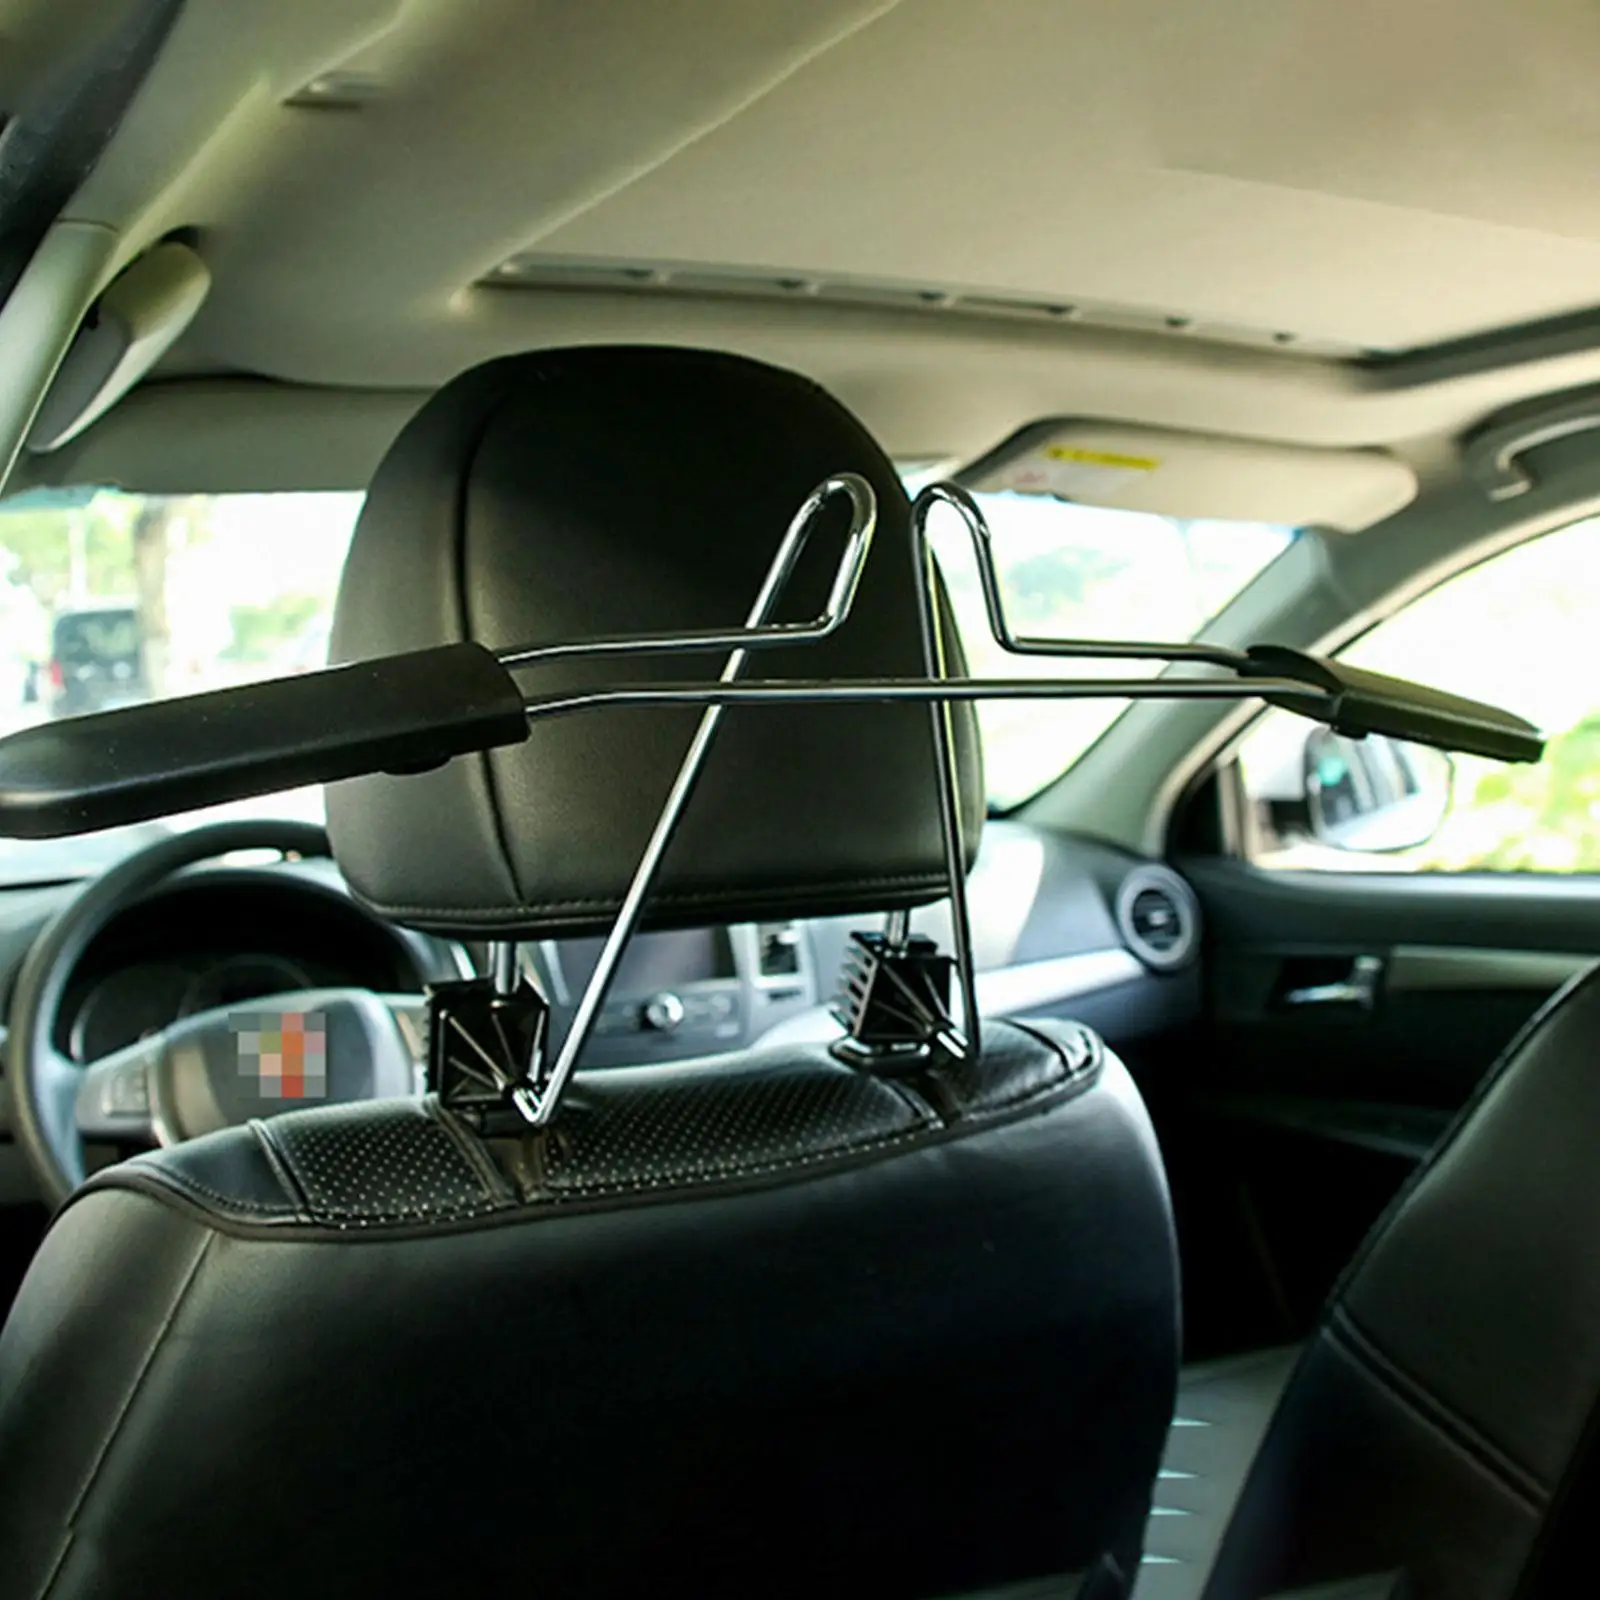 Adjustable Car Headrest Back Seat Coat Hanger Premium Quality Easy Install for Suit Jacket